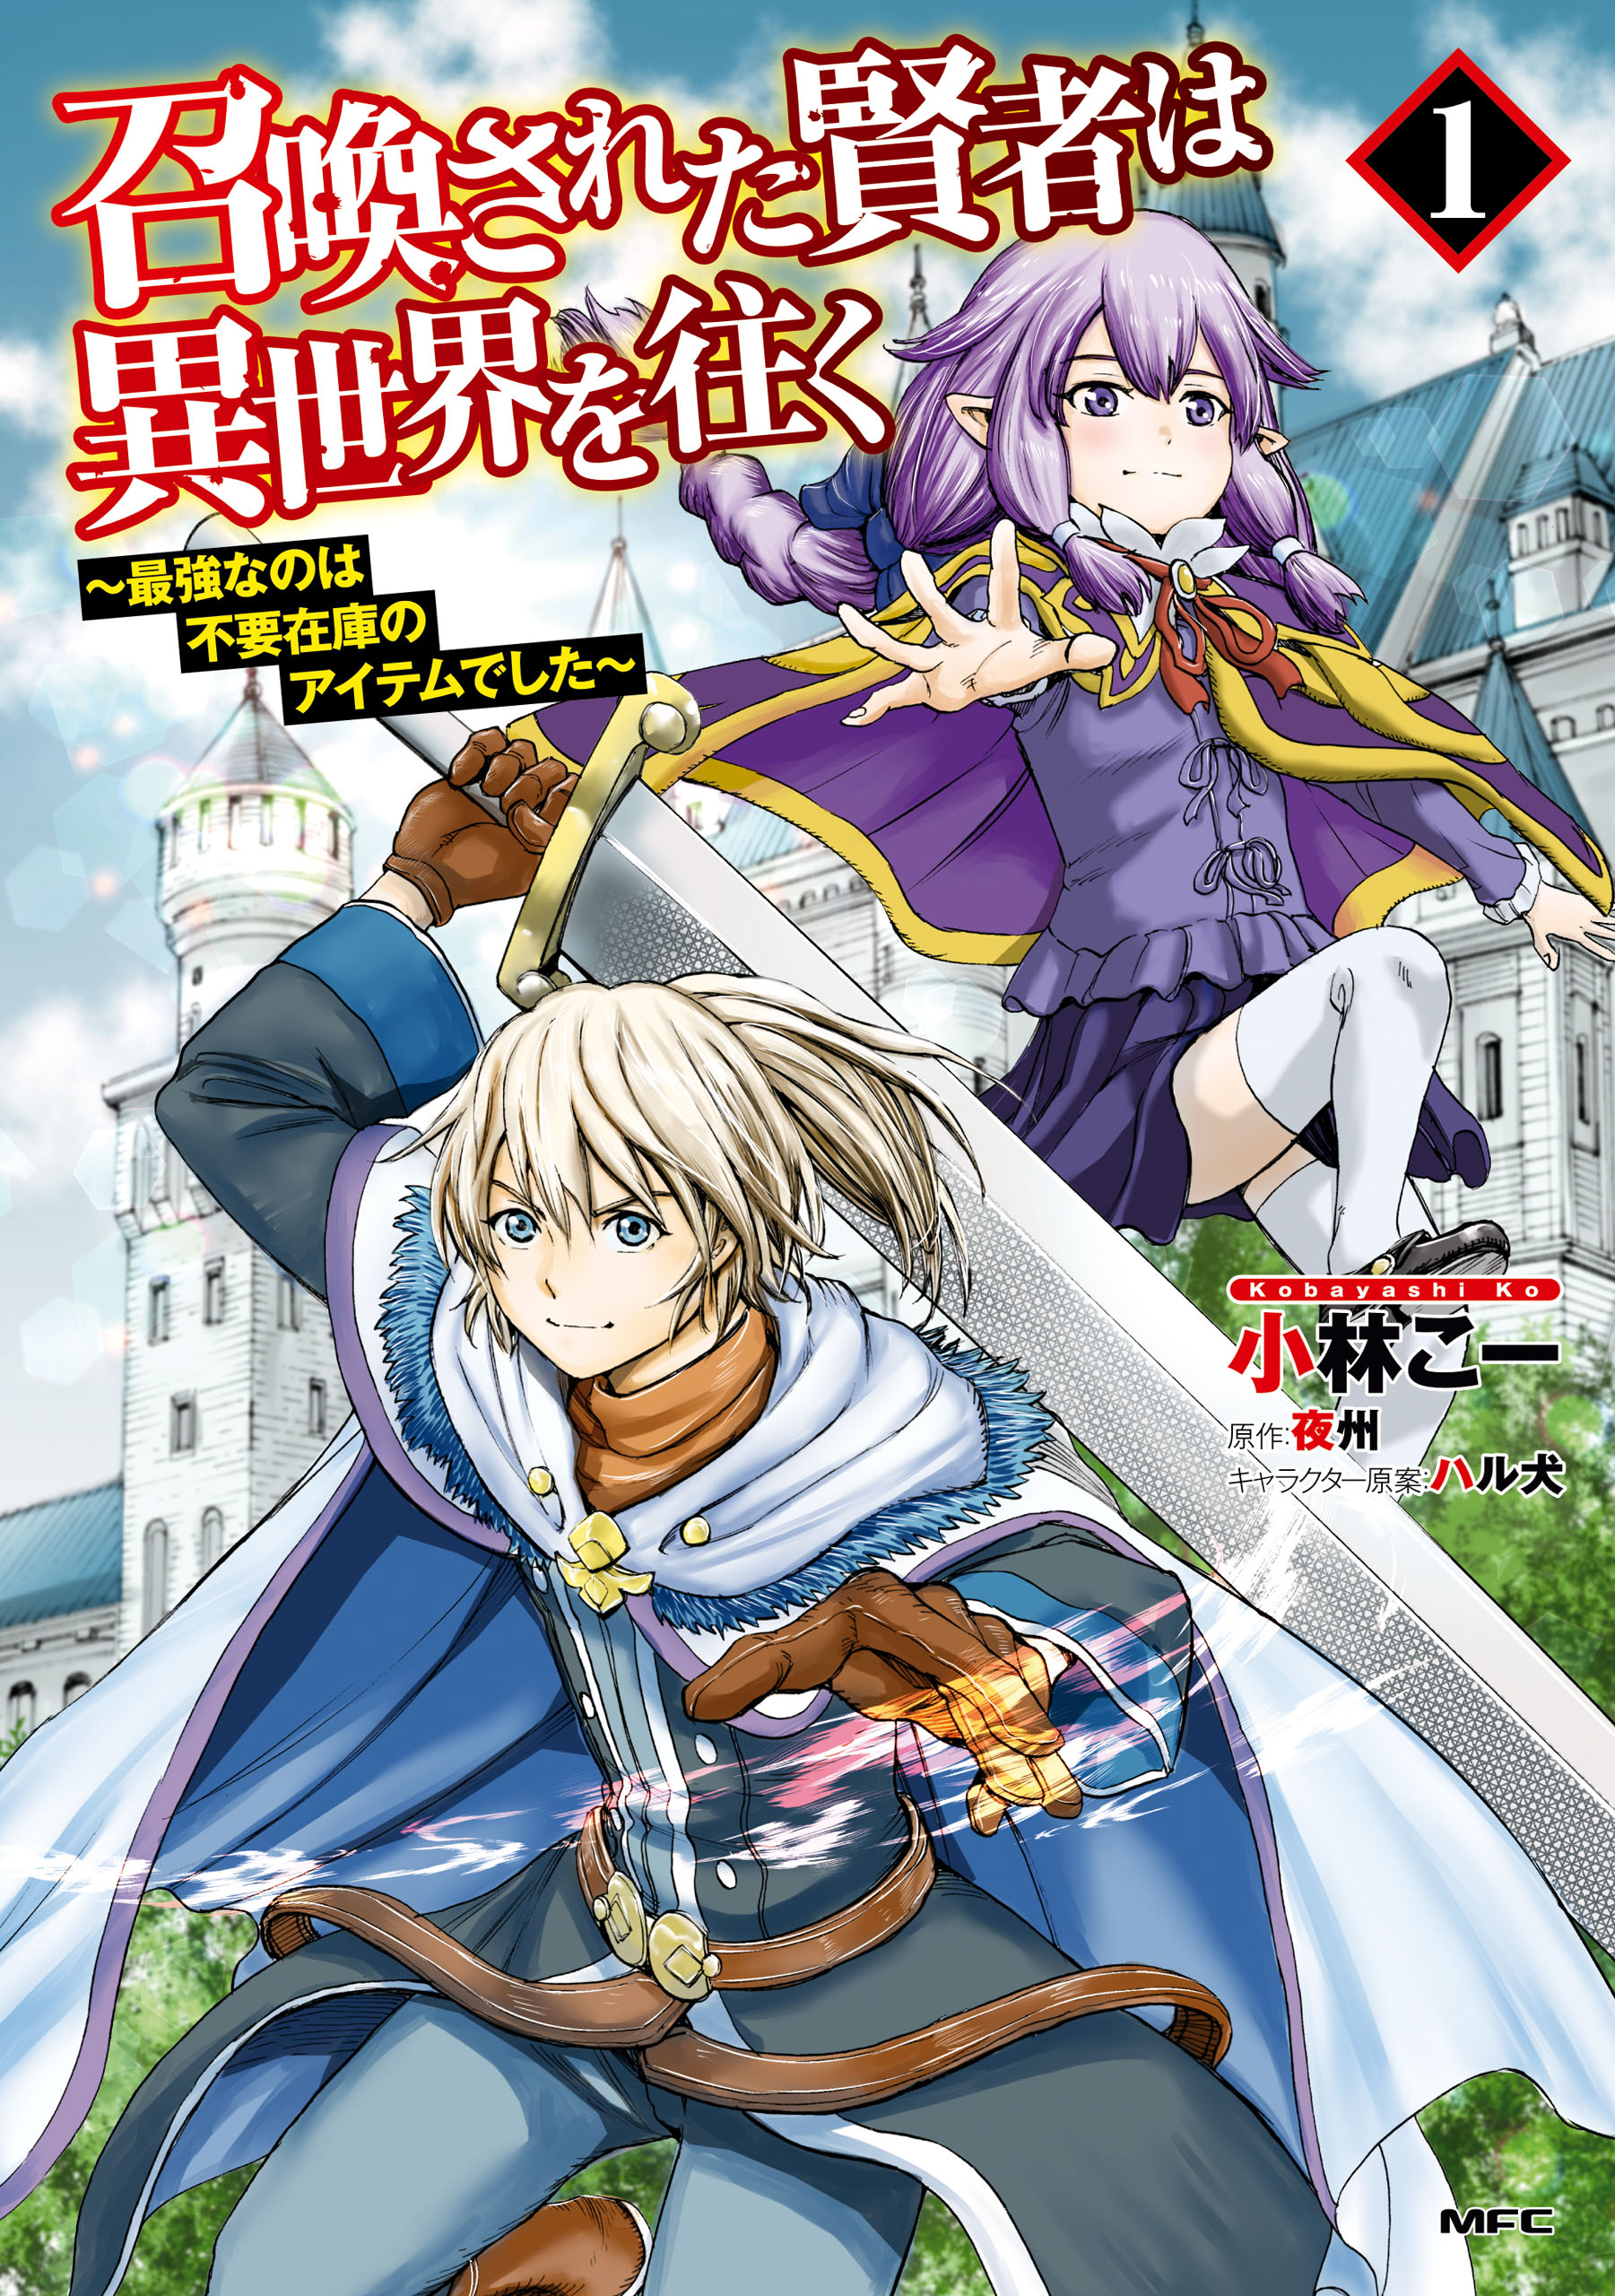 Volume 1 manga cover